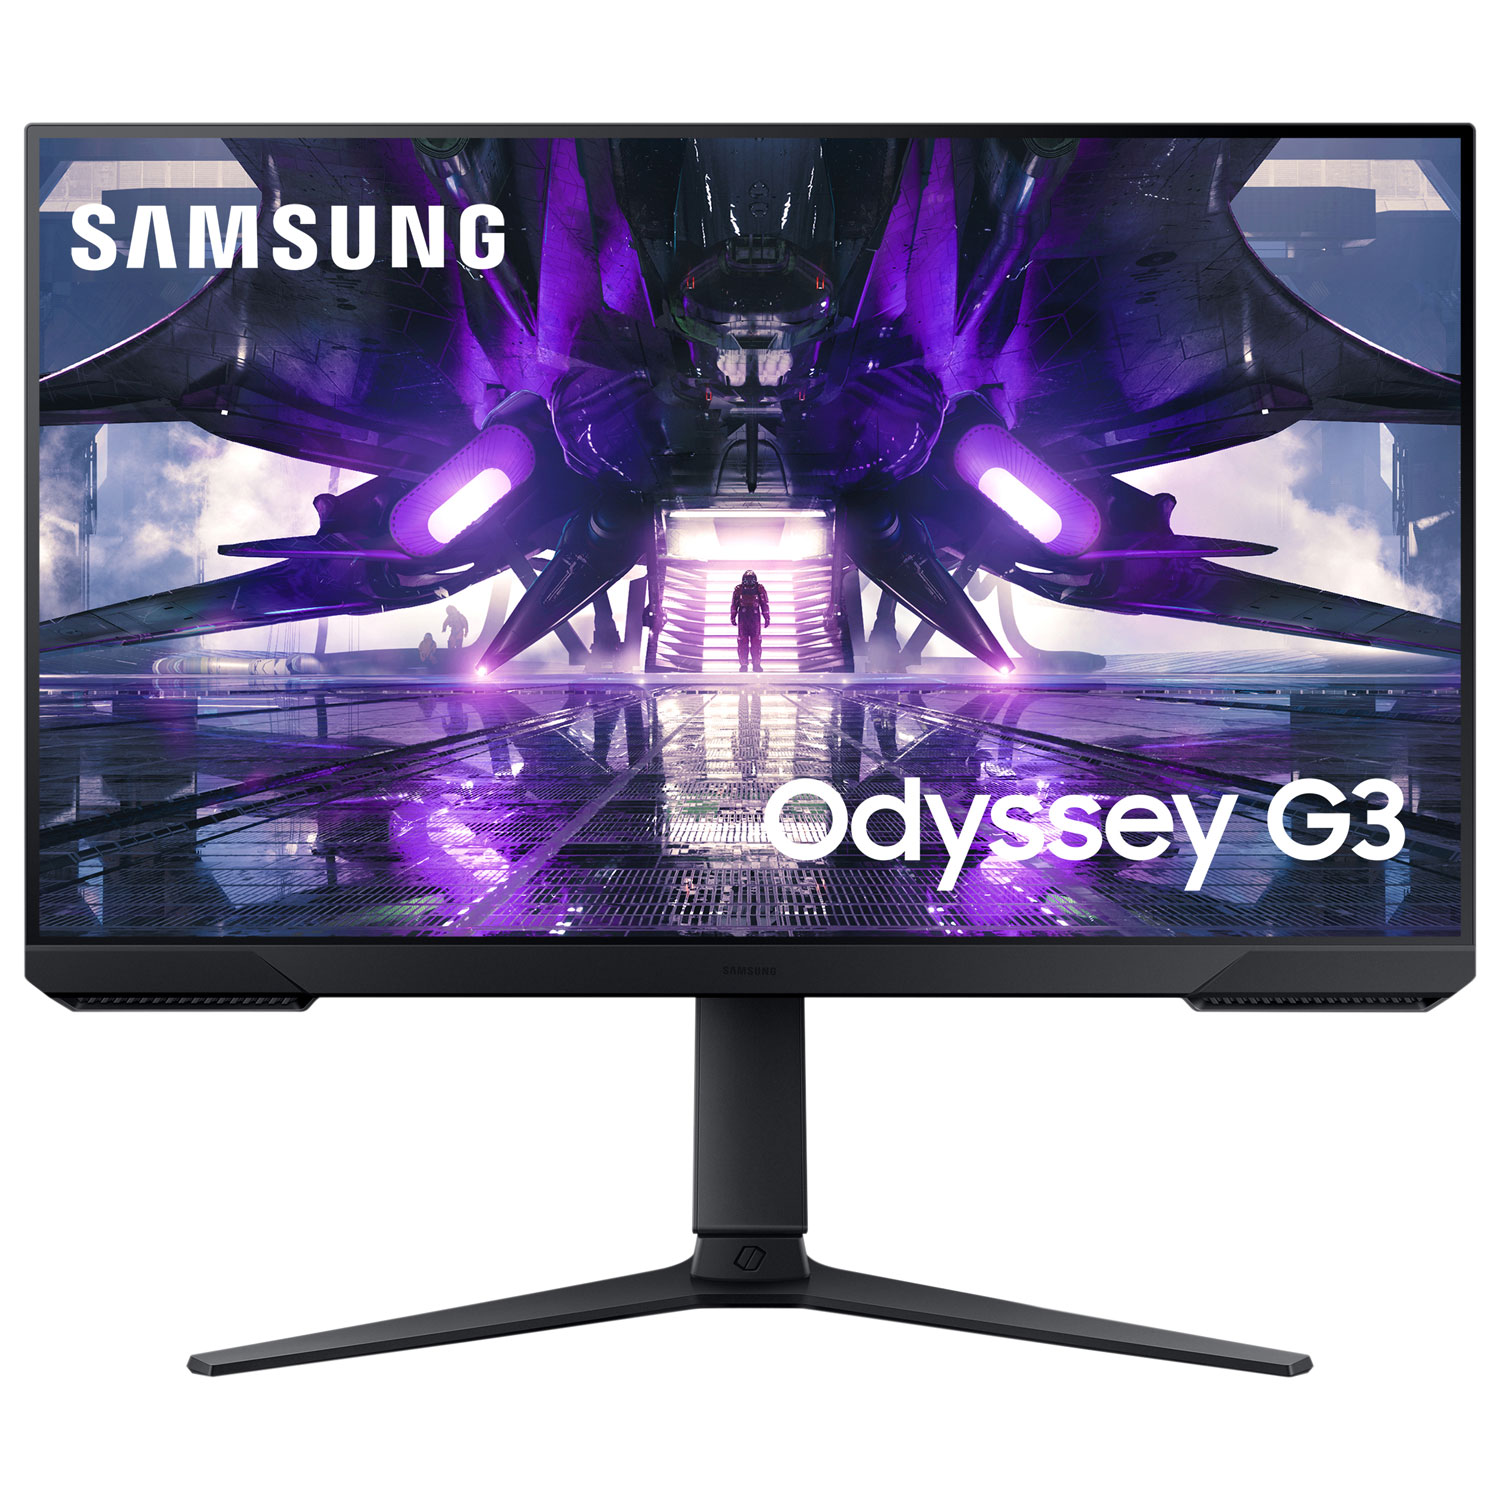 Samsung Odyssey G3 24" FHD 144Hz 1ms GTG VA LCD FreeSync Gaming Monitor (LS24AG30ANNXZA) - Black